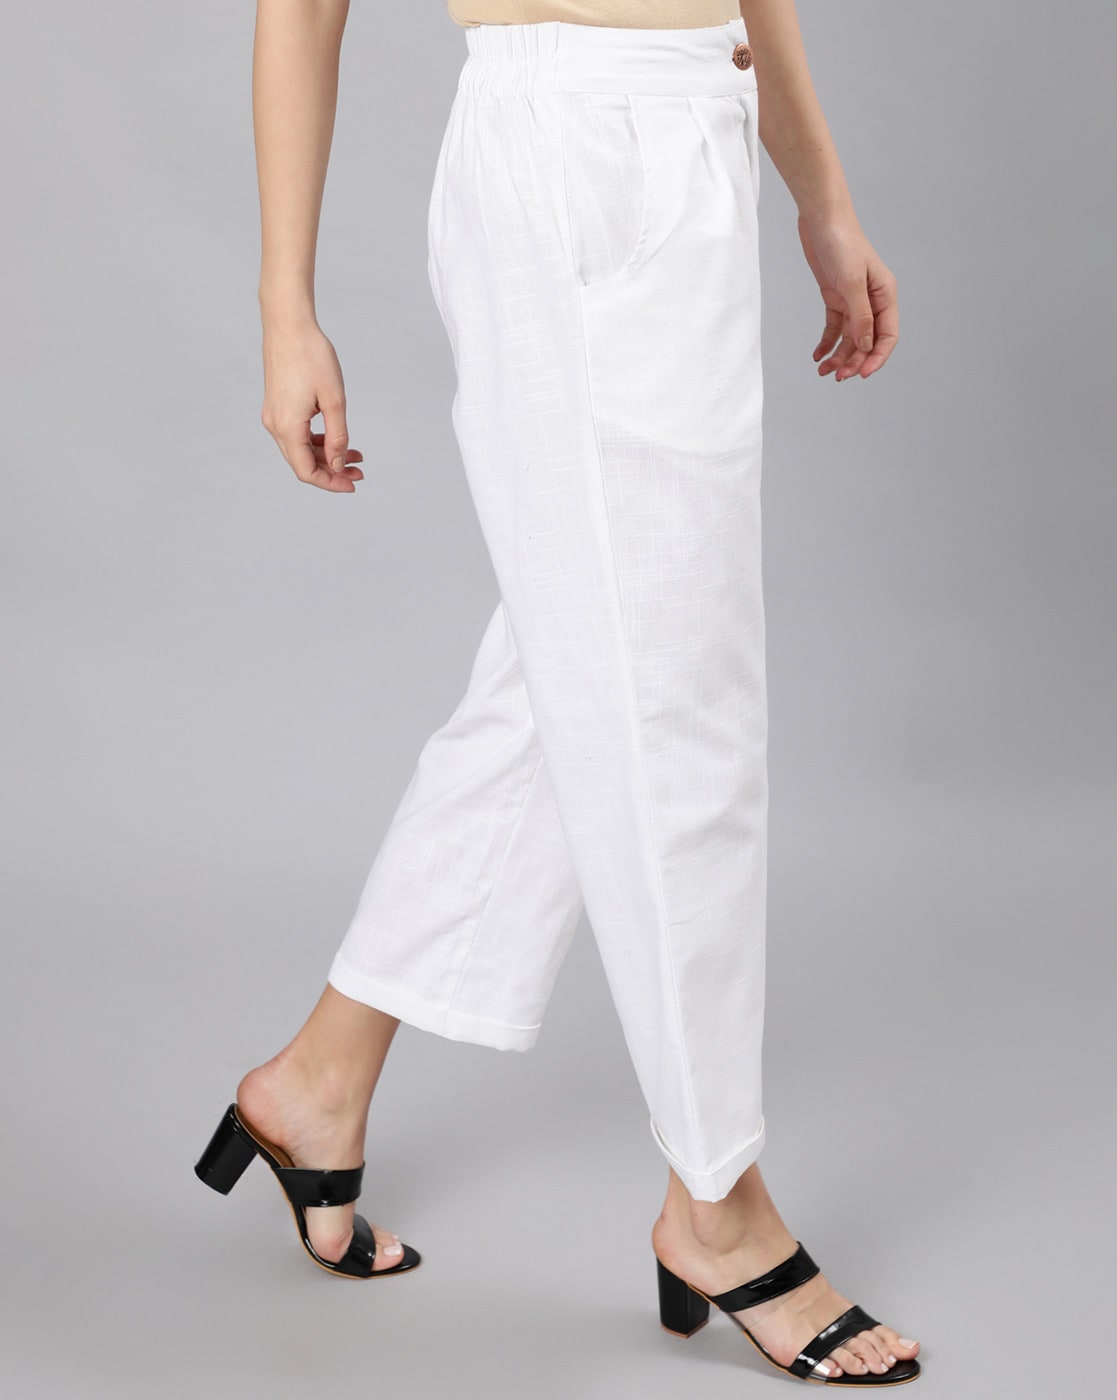 Angel Biba | Pants & Jumpsuits | Angel Biba Blue White Floral Deep V Neck  Romper Dress Size Au Or Us 6 | Poshmark